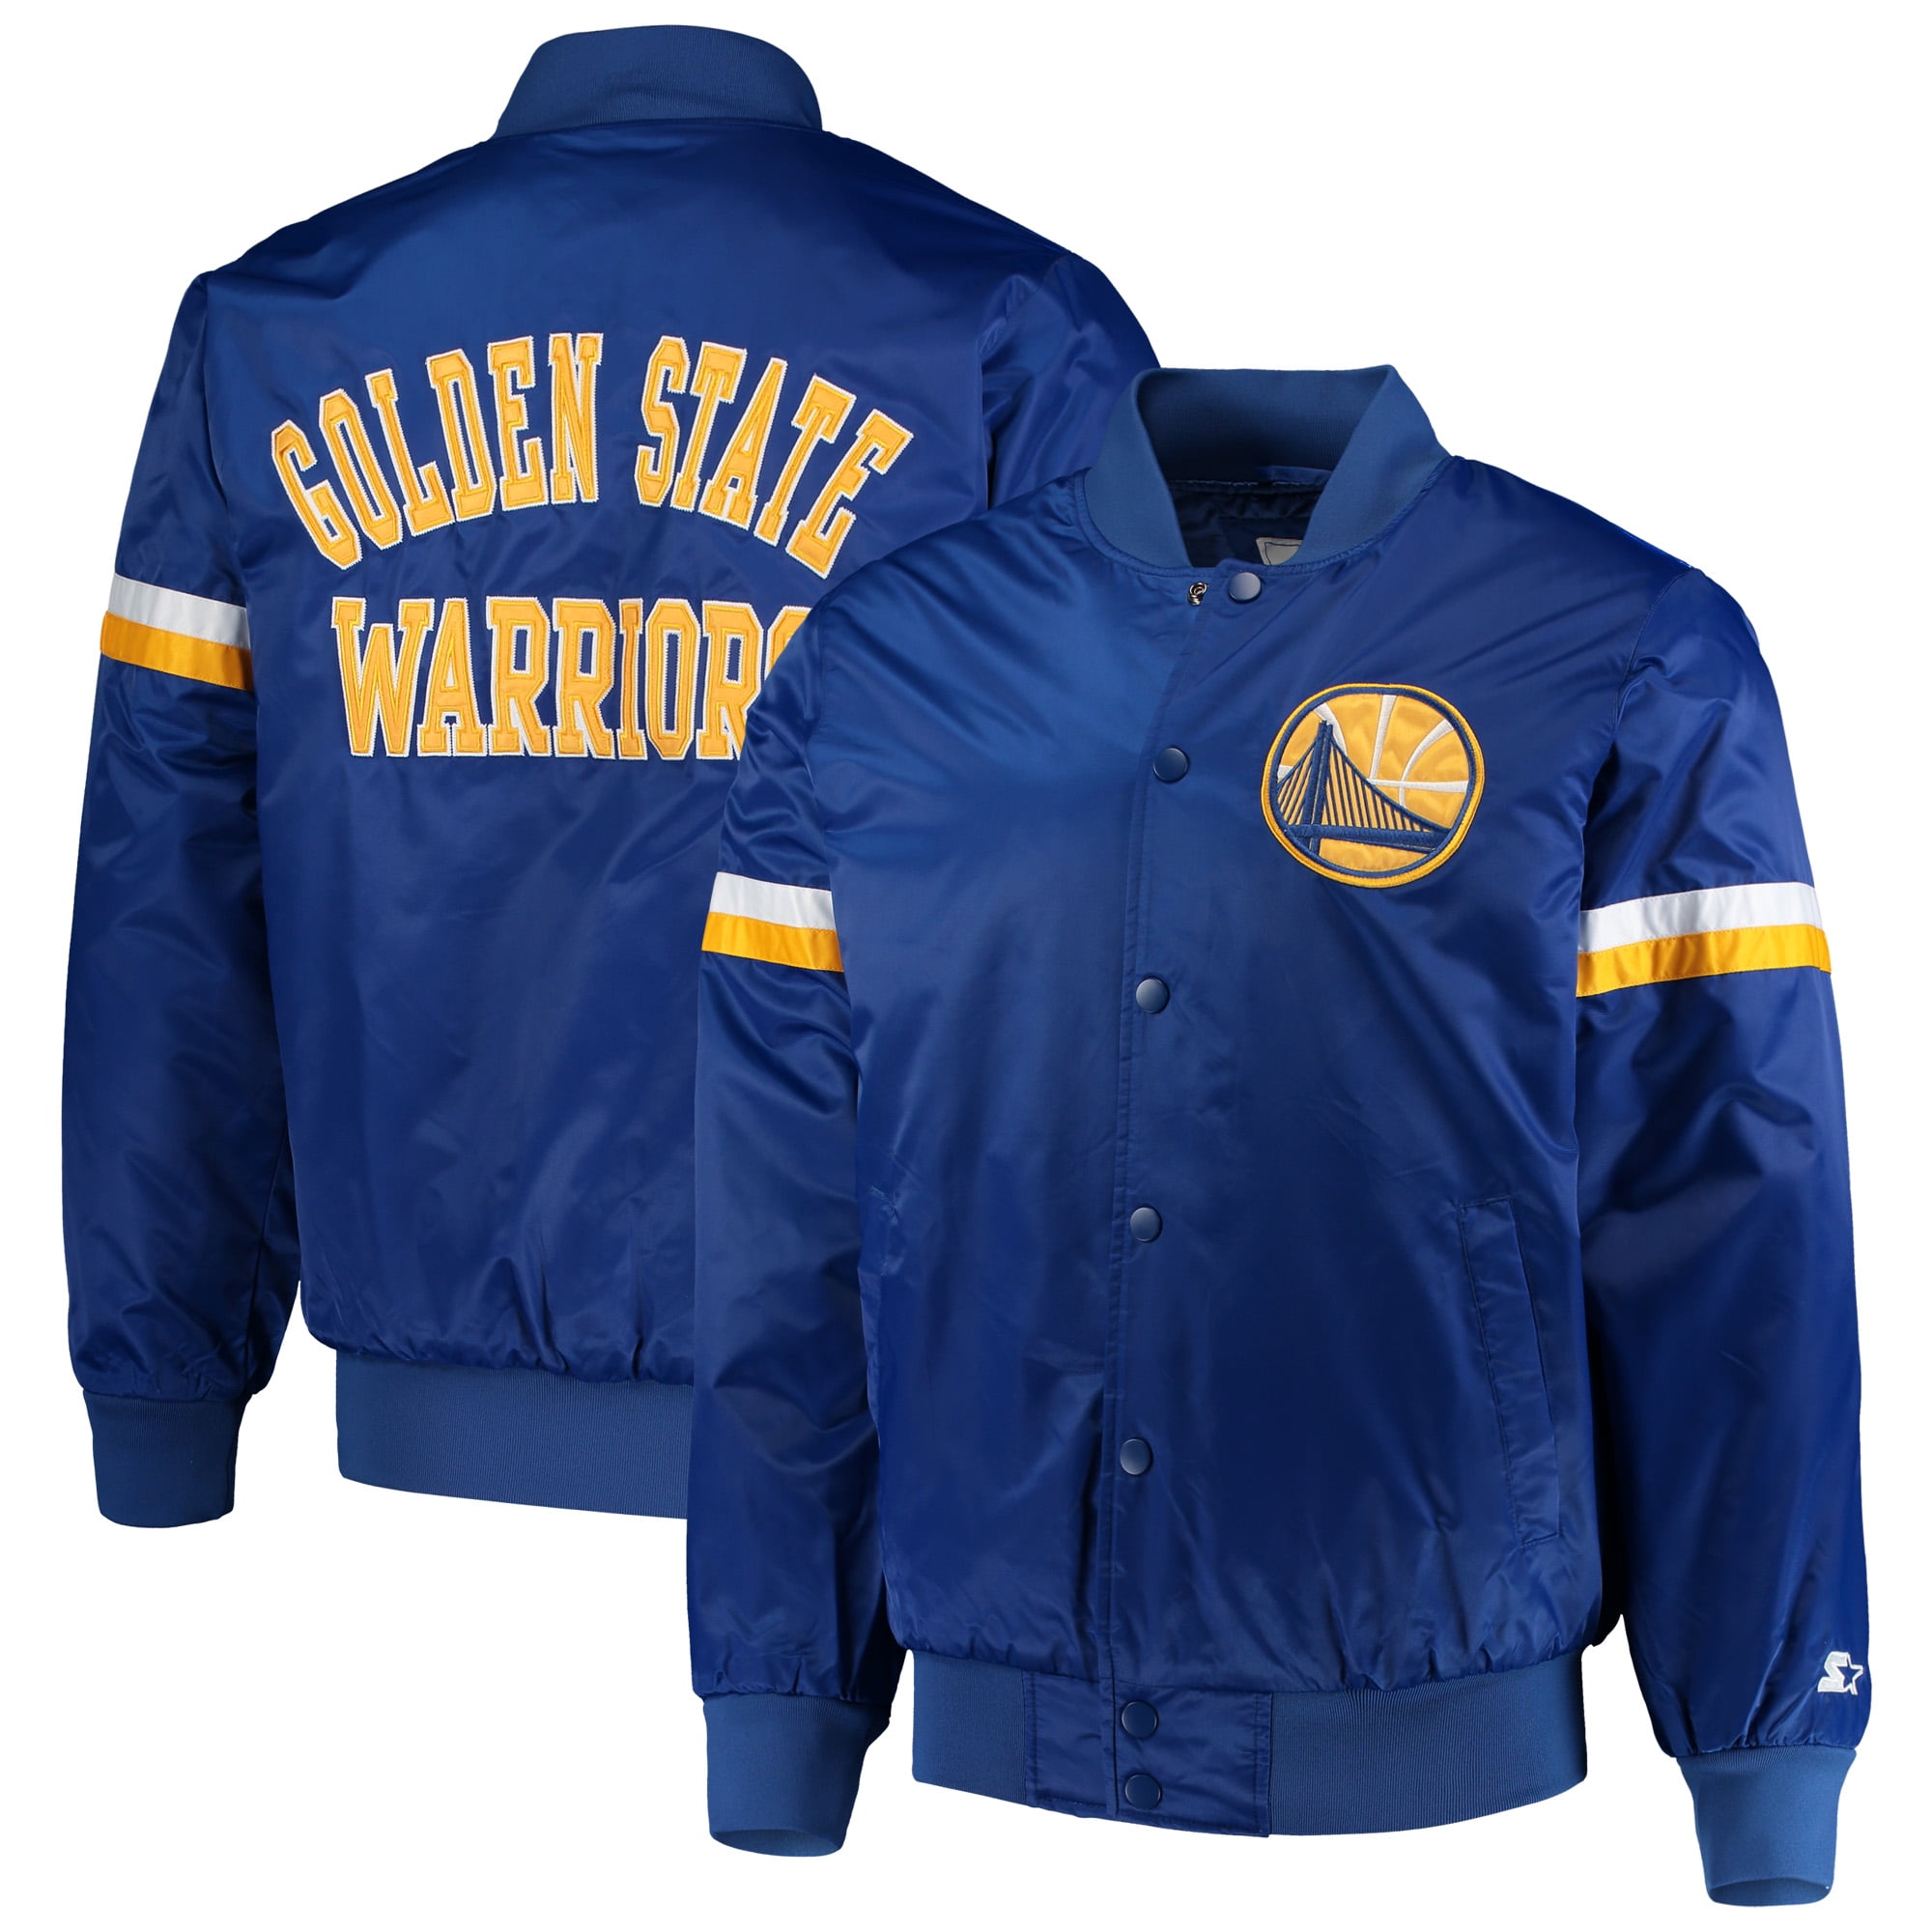 Golden State Warriors Starter The Champ Varsity Satin Jacket - Royal - Walmart.com